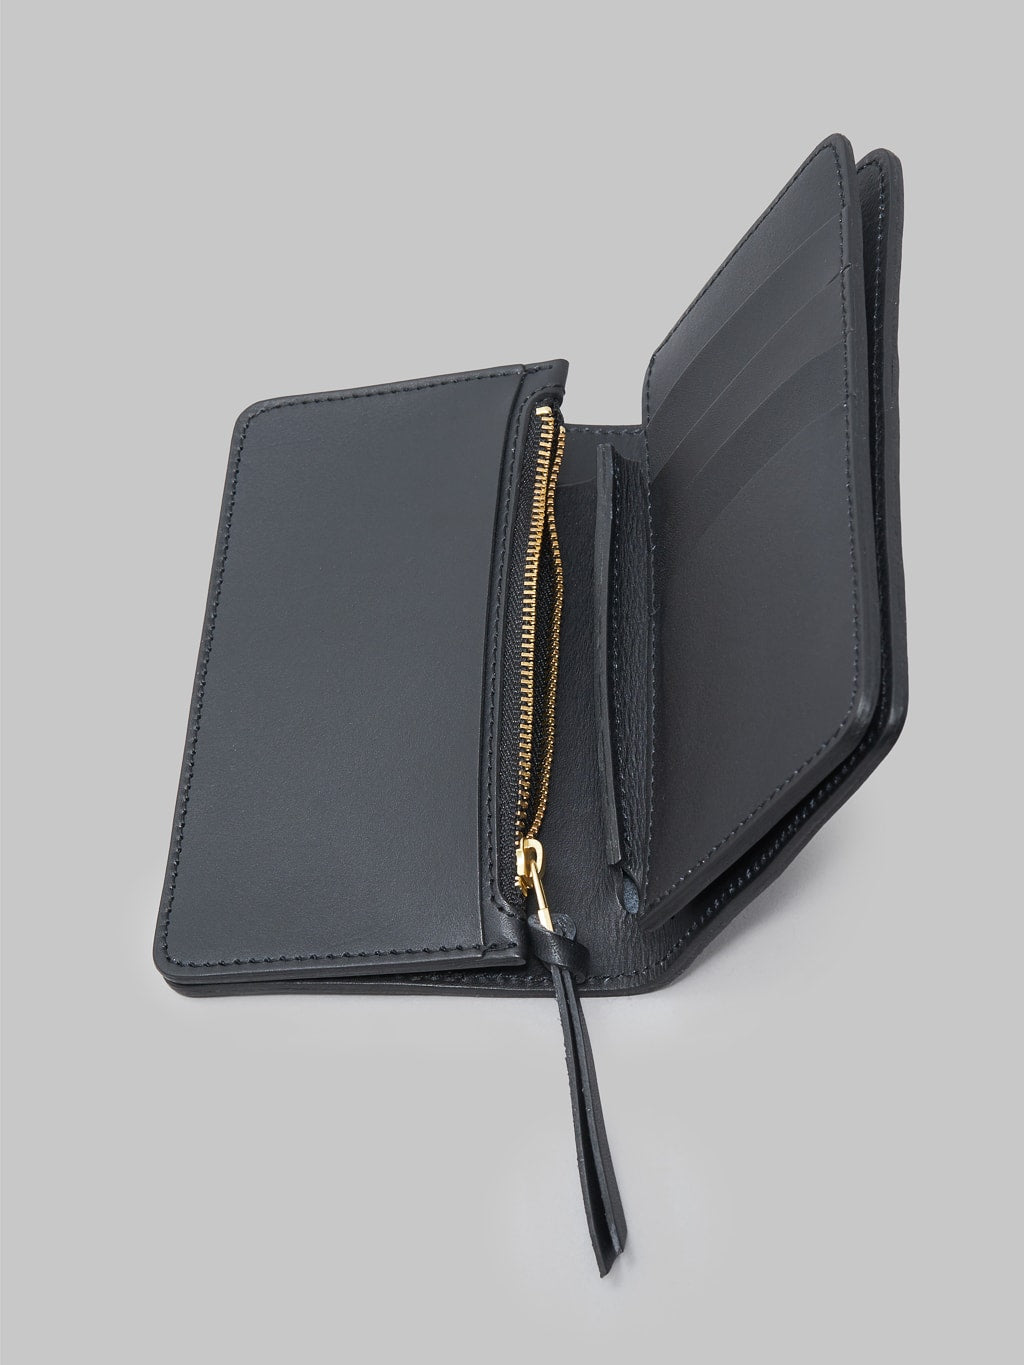 Kobashi Studio Middle Wallet Black zipper